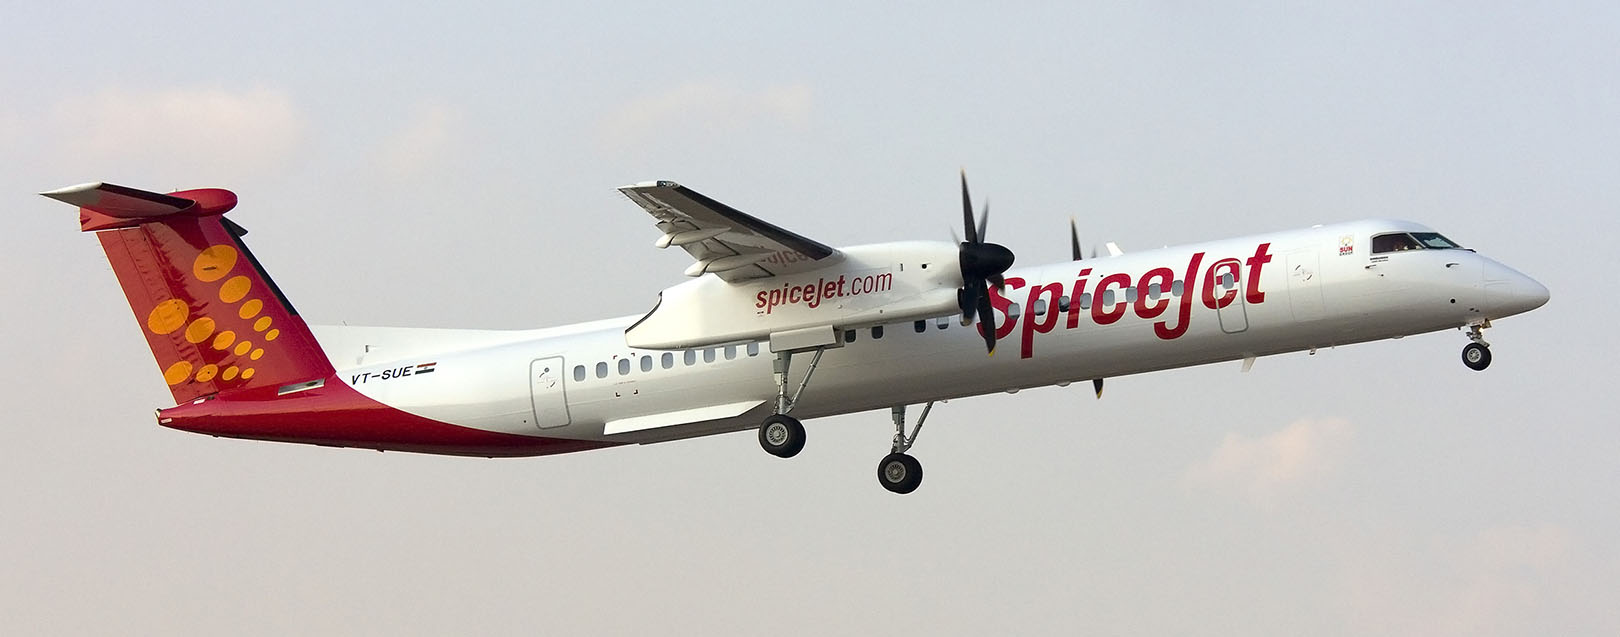 SpiceJet to lease single-aisle aircraft